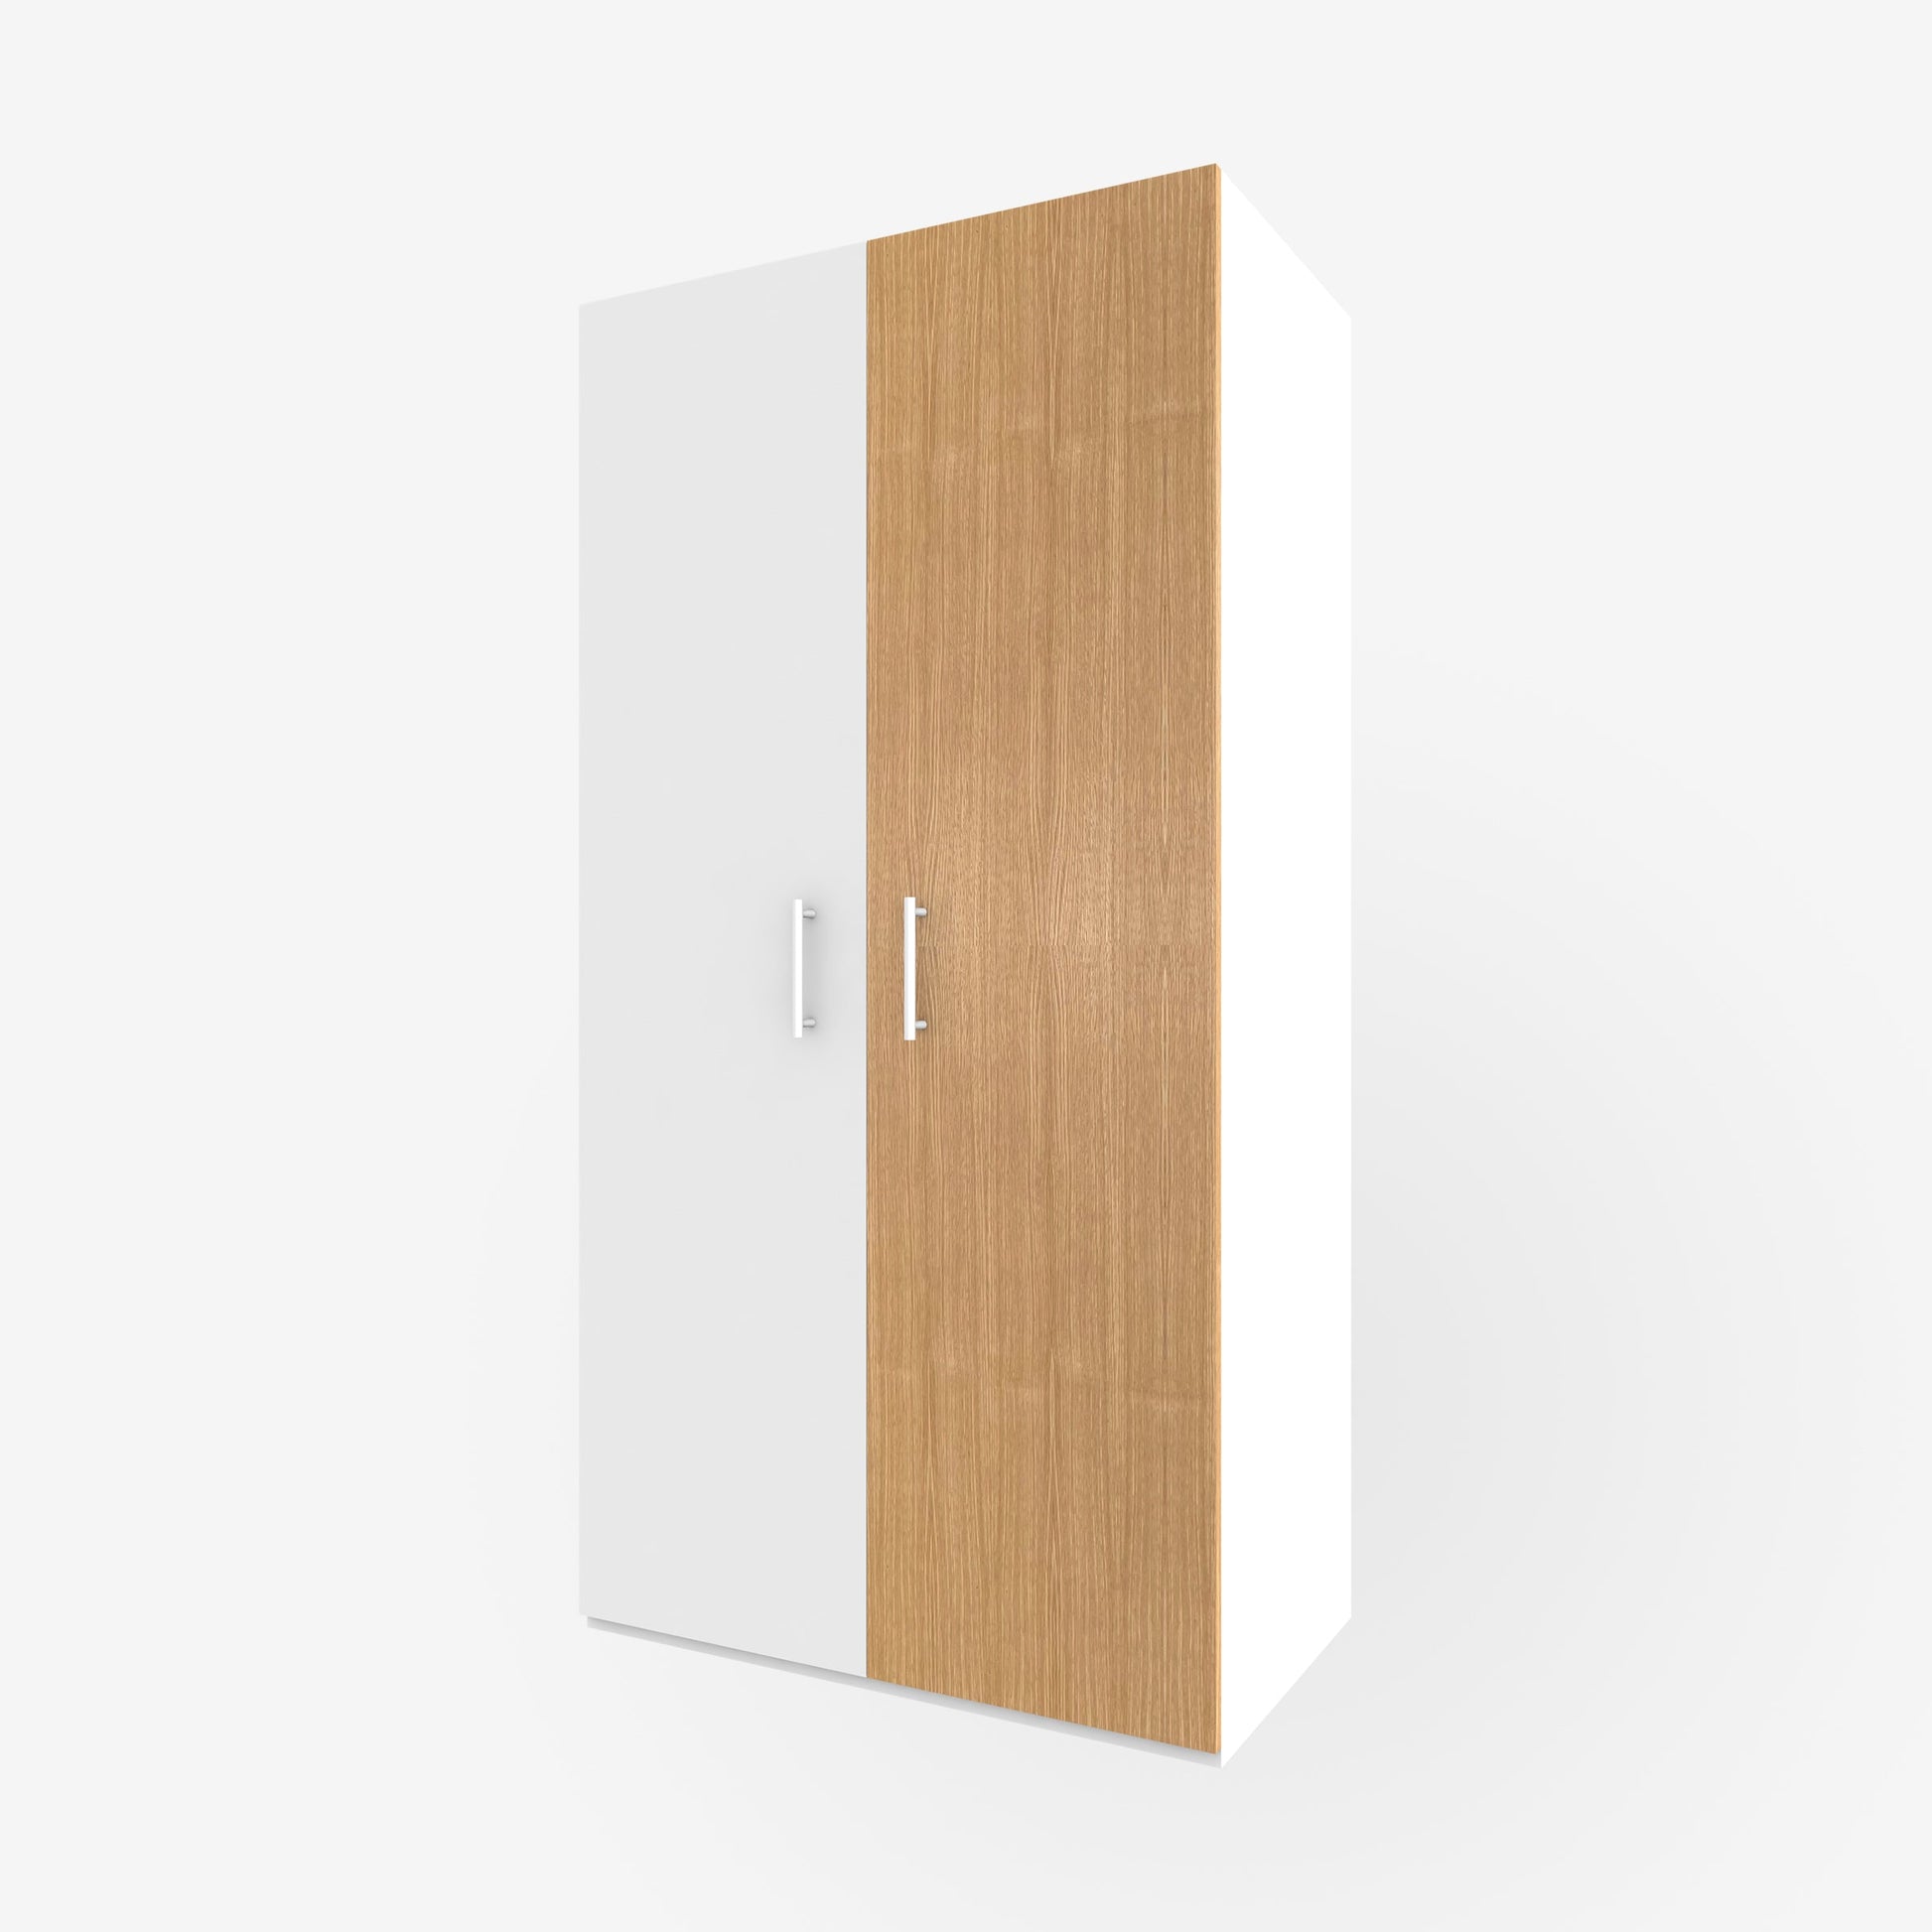 19.5" x 79" real wood veneer white oak slab door for Ikea or Swedeboxx pax closet cabinet